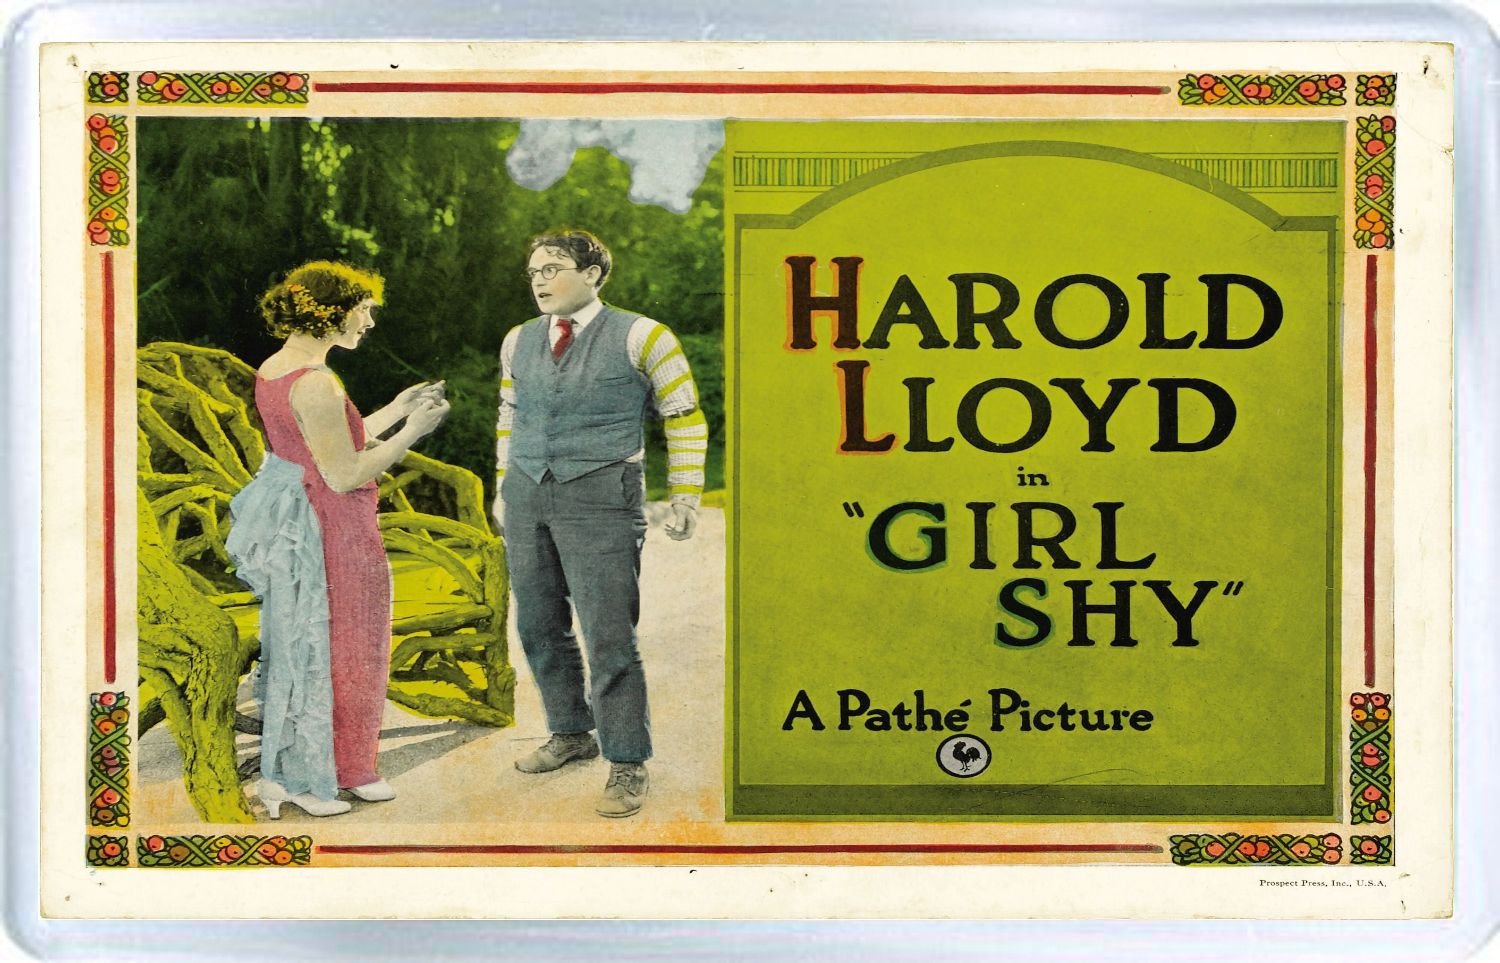 Harold Lloyd and Jobyna Ralston in Girl Shy (1924)